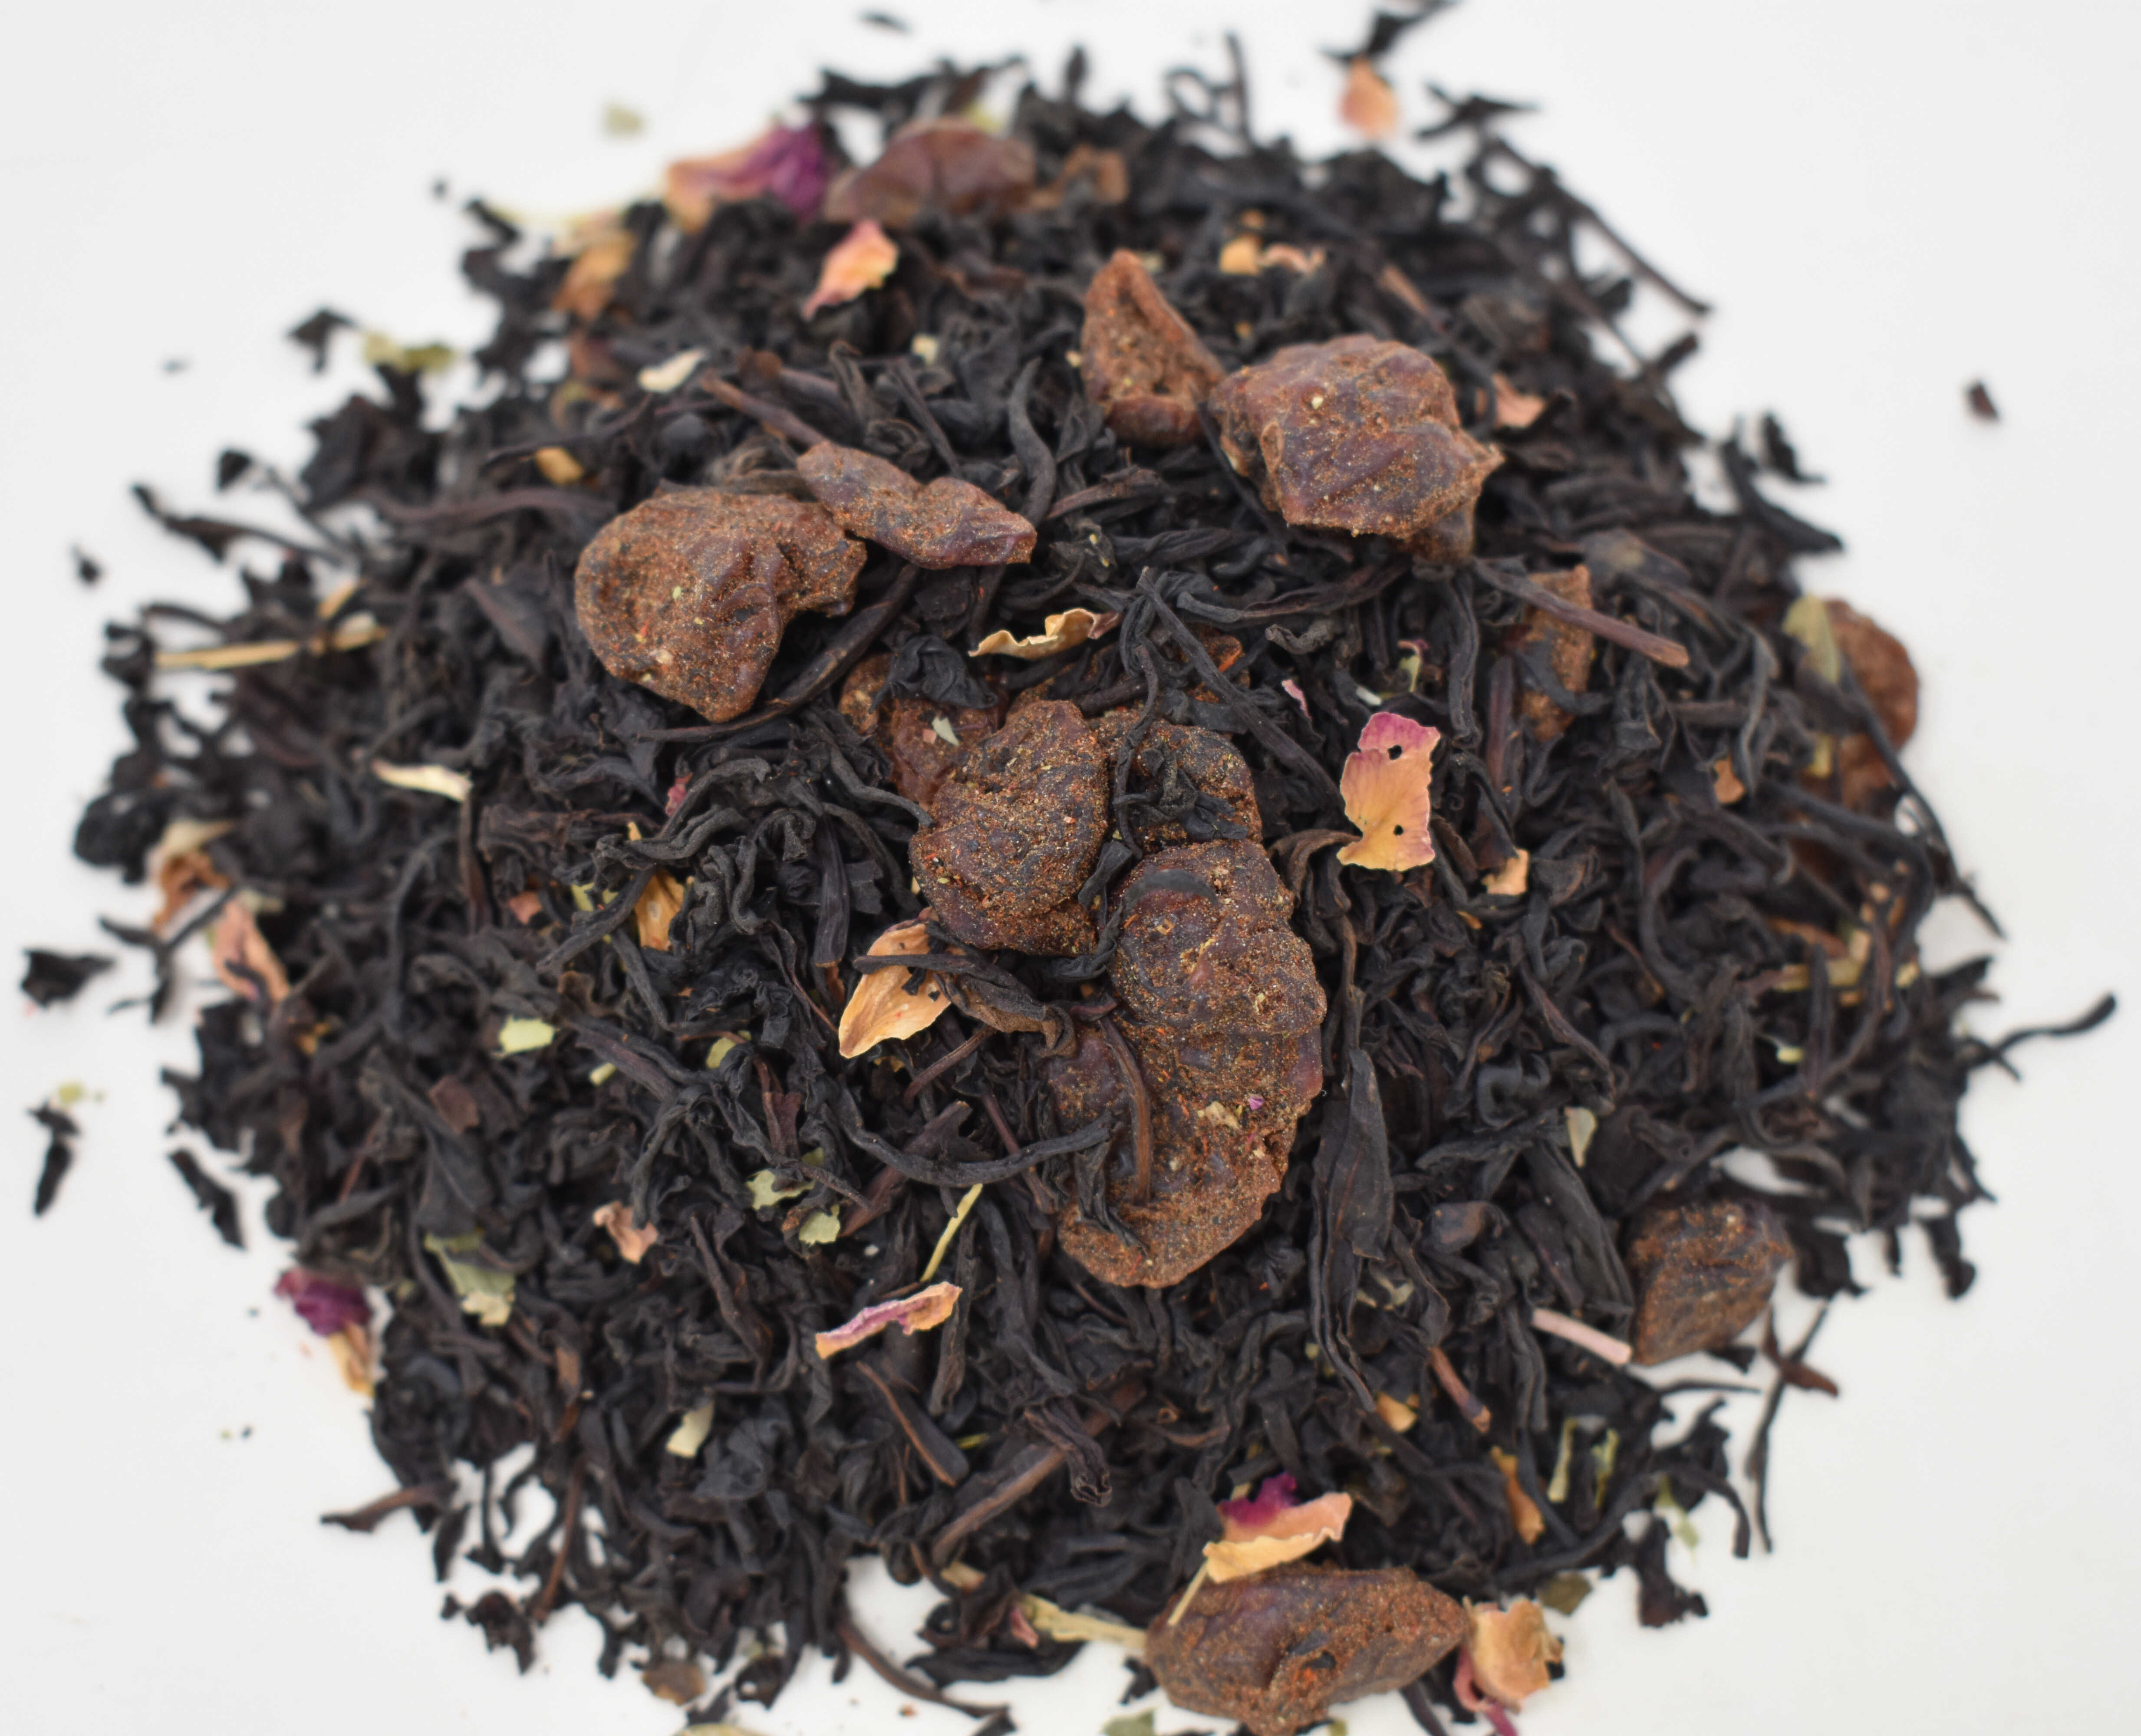 Red Currant Black Tea - Top Photo